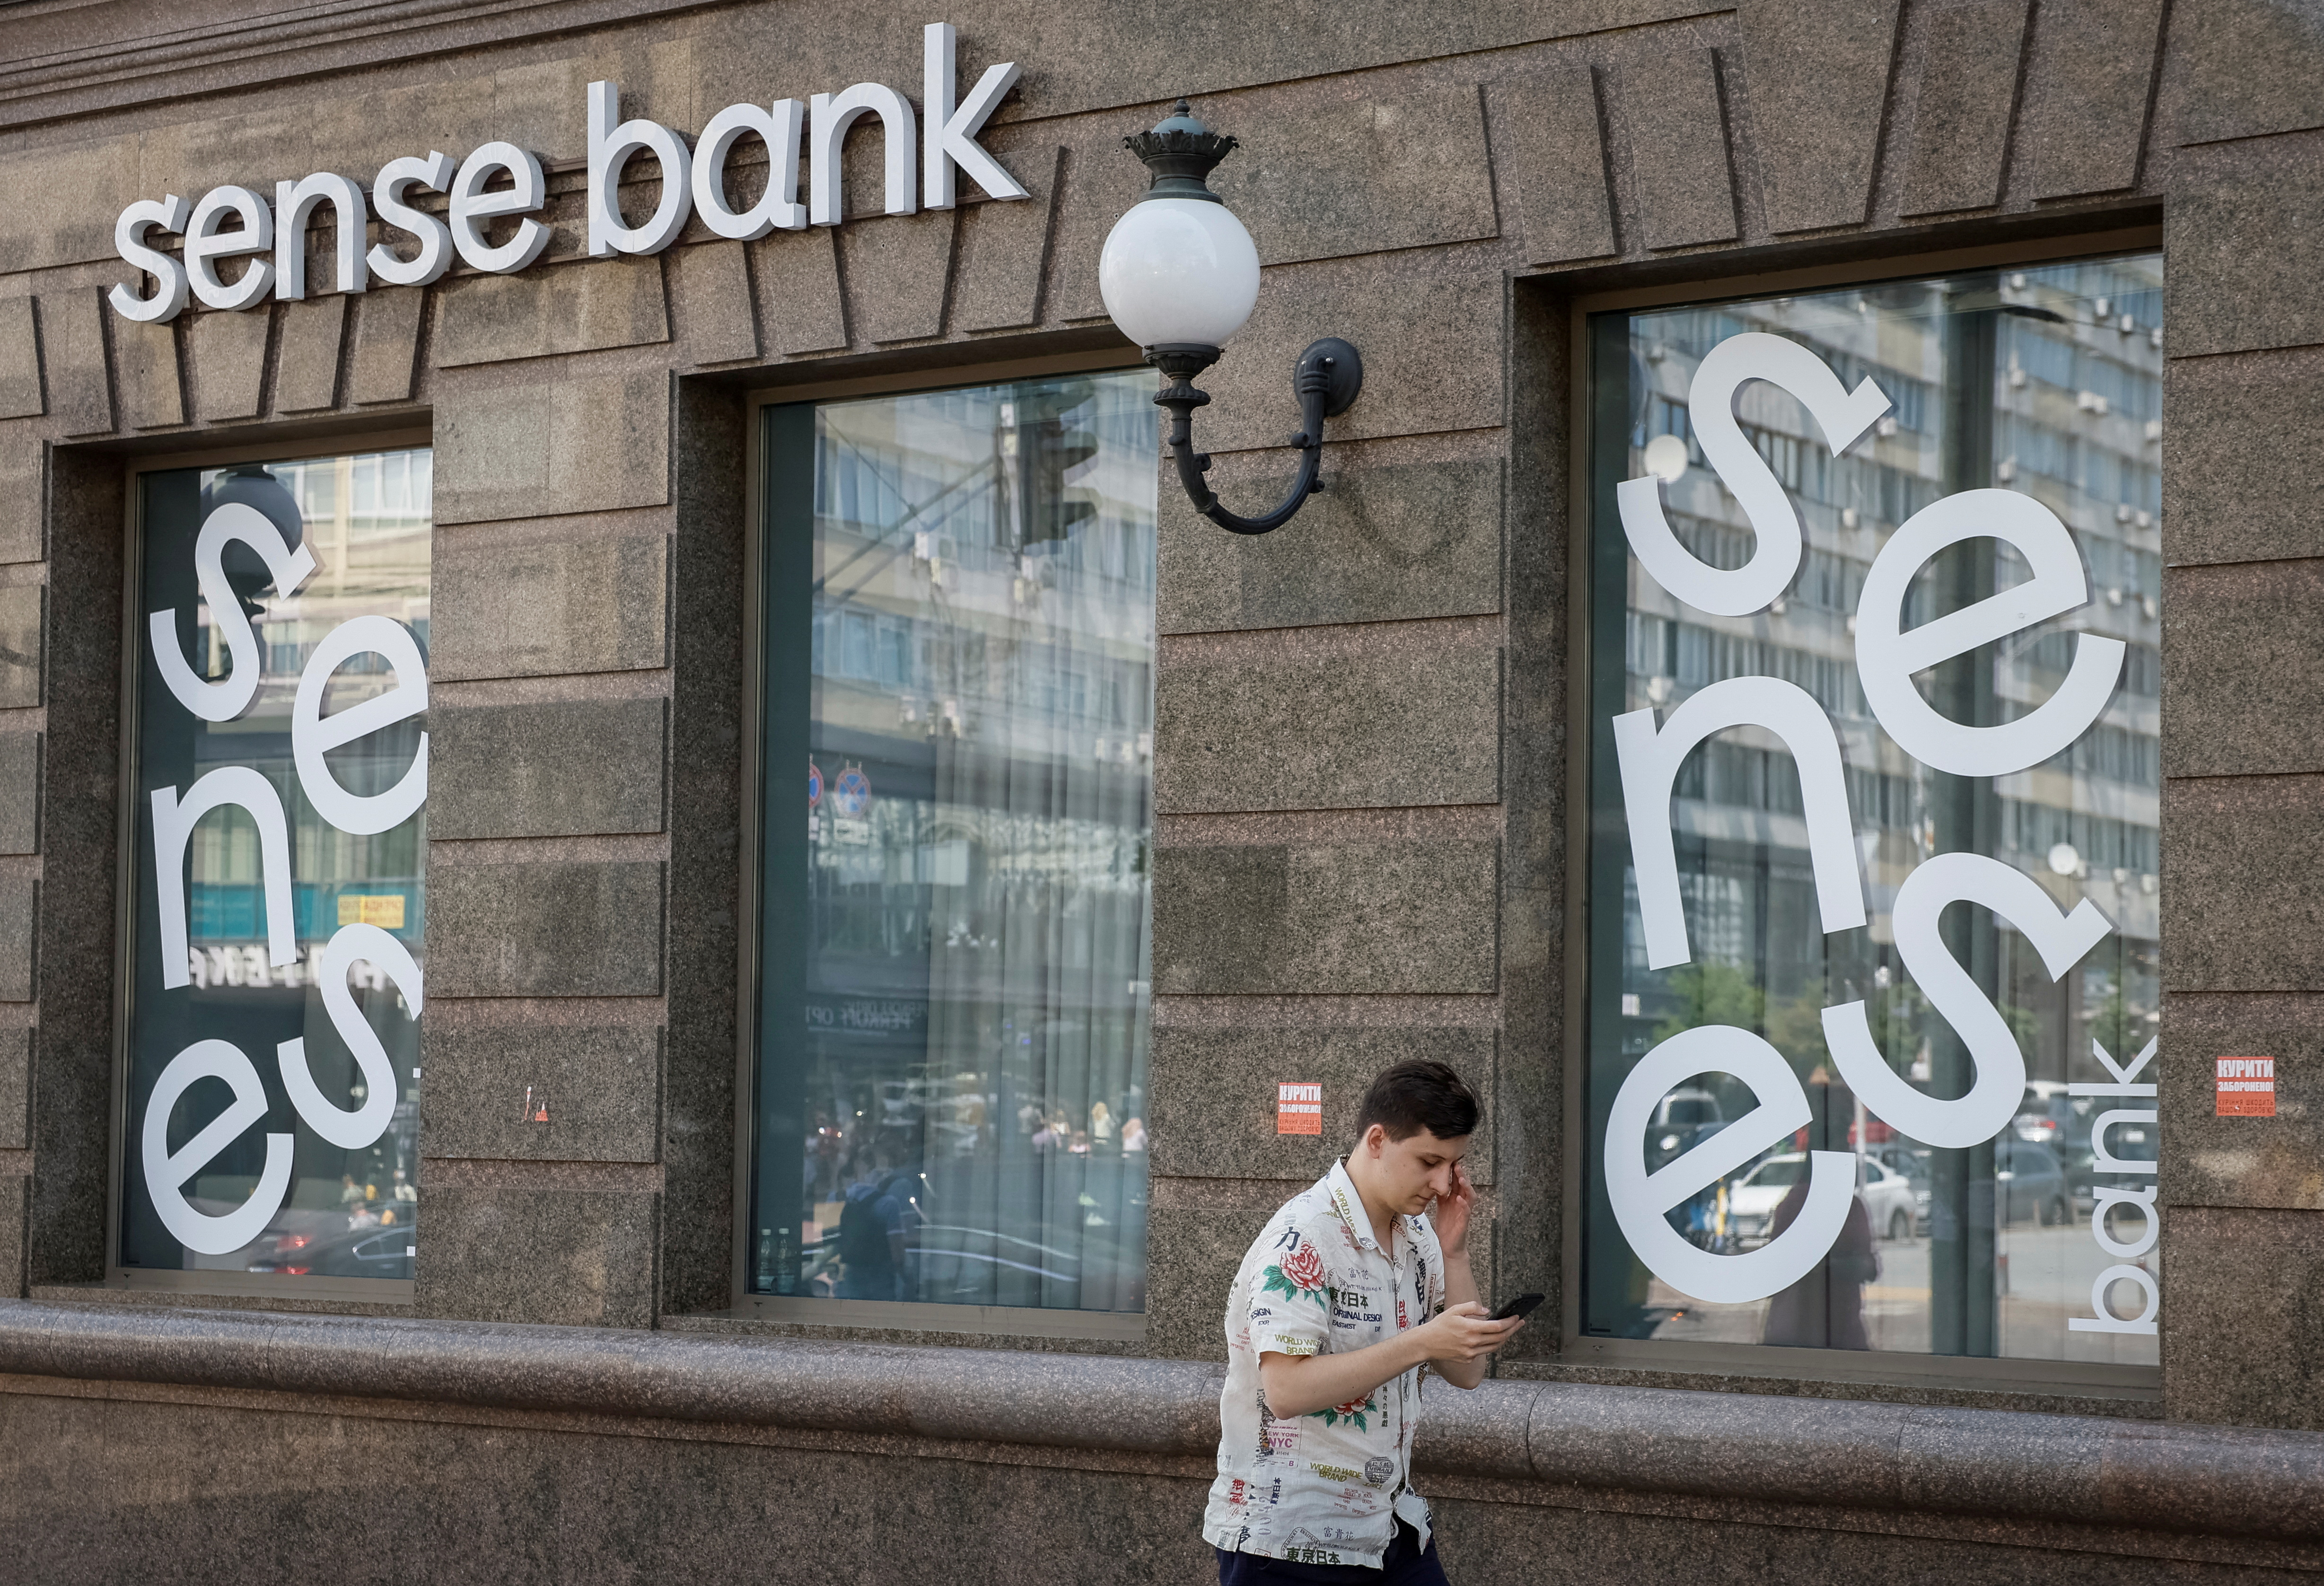 Ukraine completes nationalisation of Sense bank